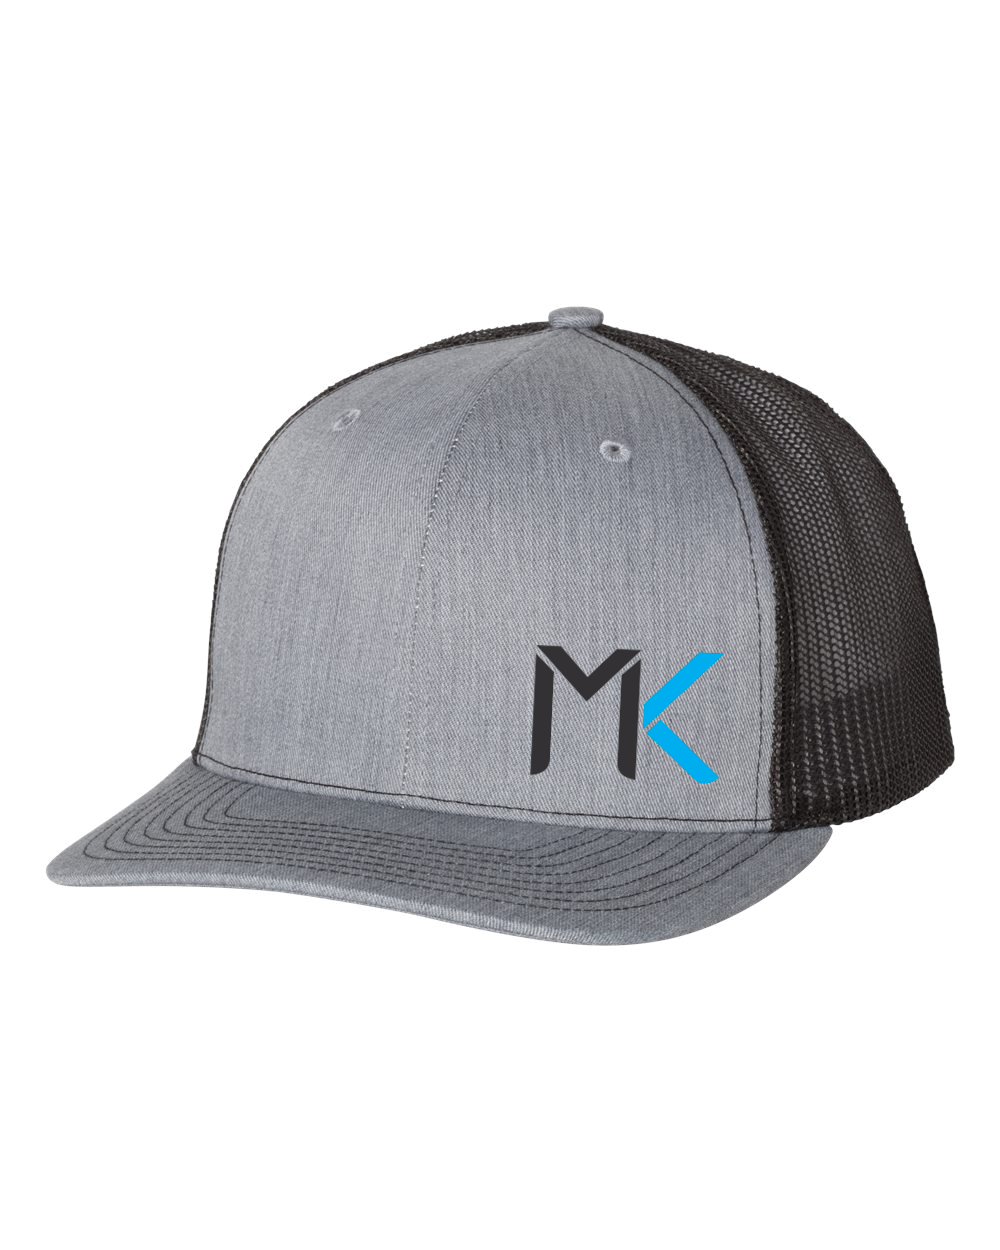 MK ICON Trucker Hat - Grey/Black